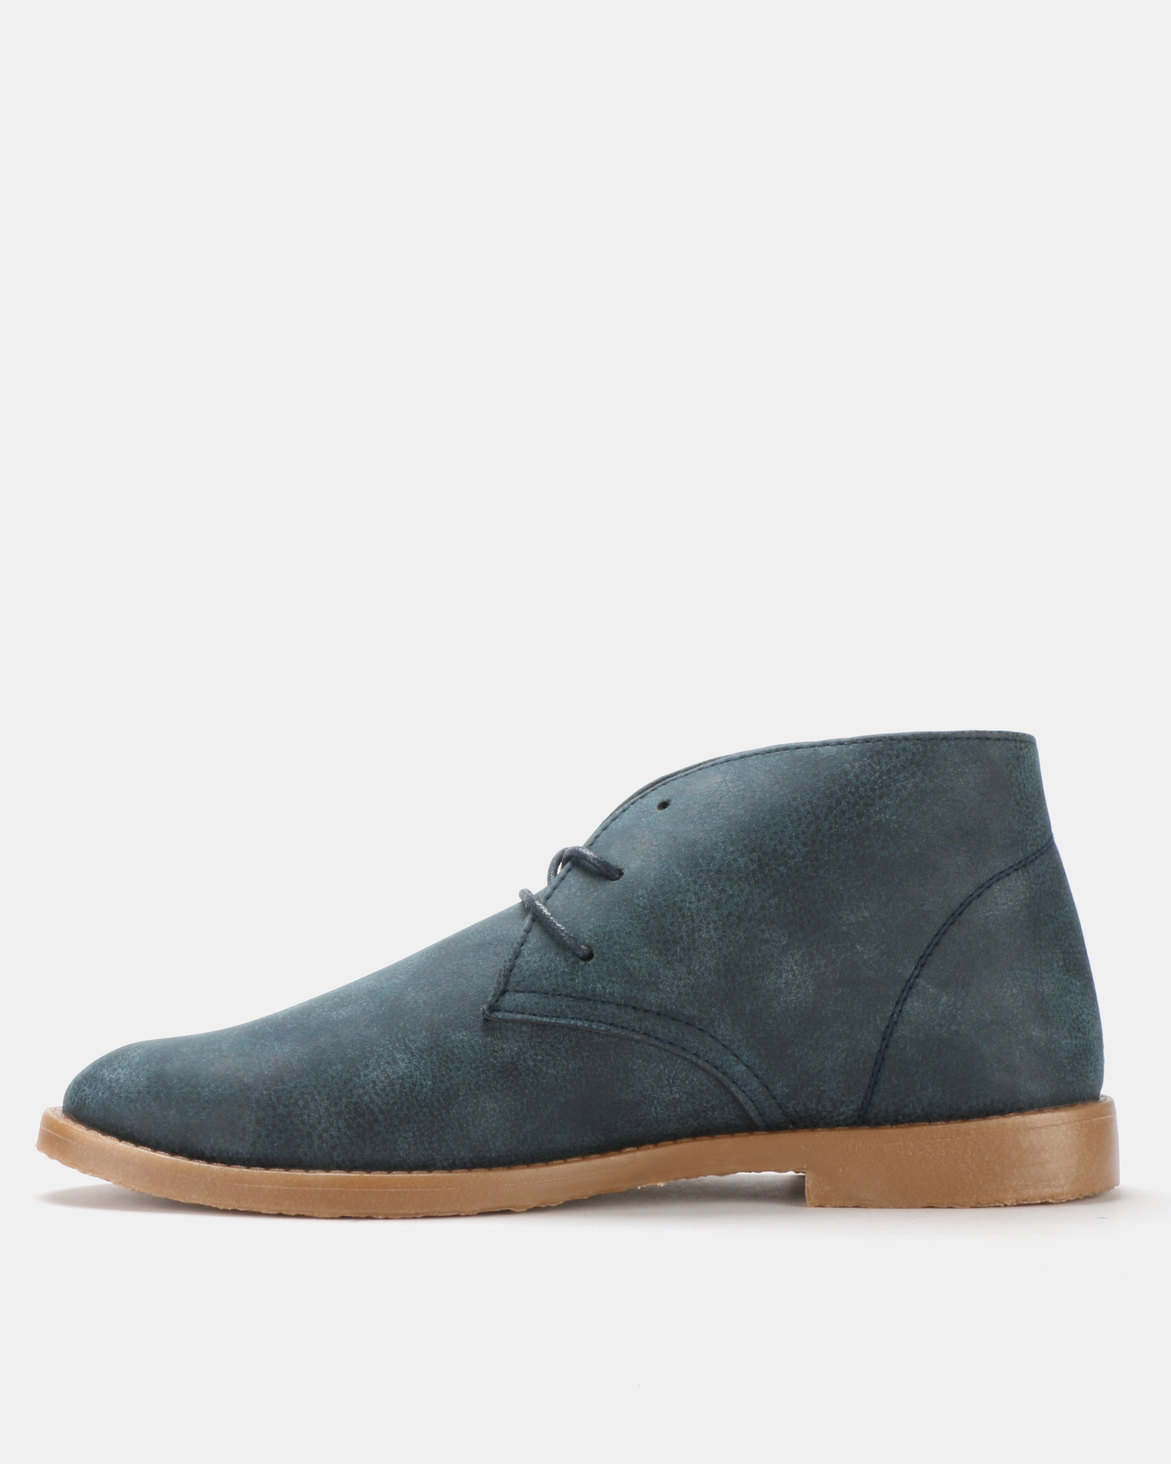 Pierre Cardin Lace Up Shoes Navy | Zando